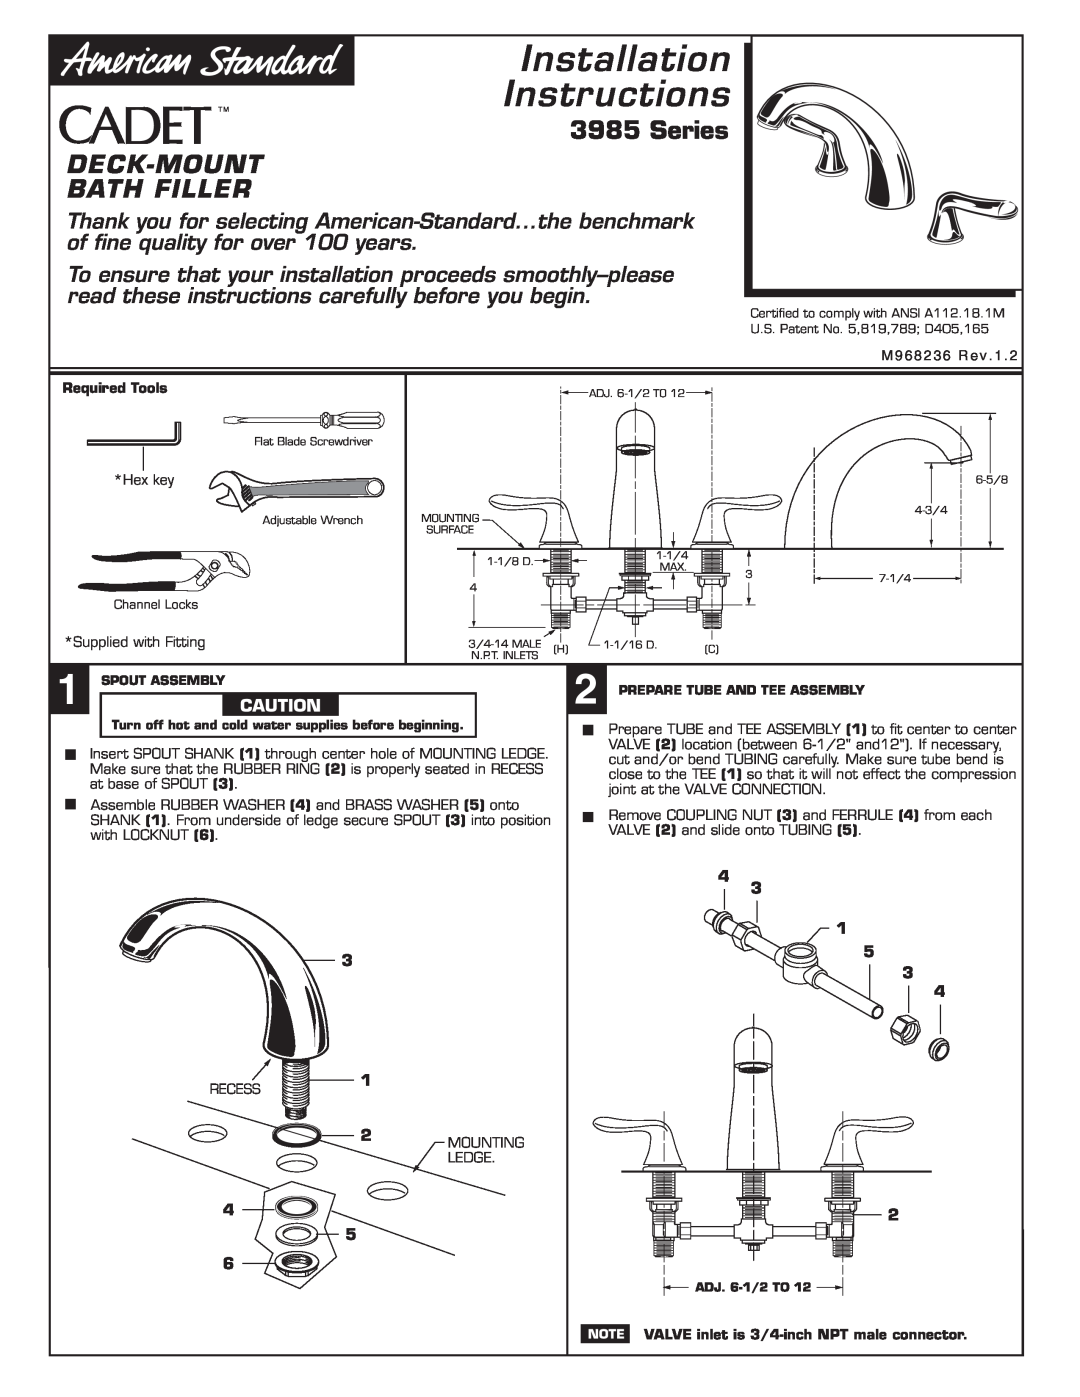 American Standard 3985 installation instructions Deck-Mount Bath Filler, Installation Instructions, Series 